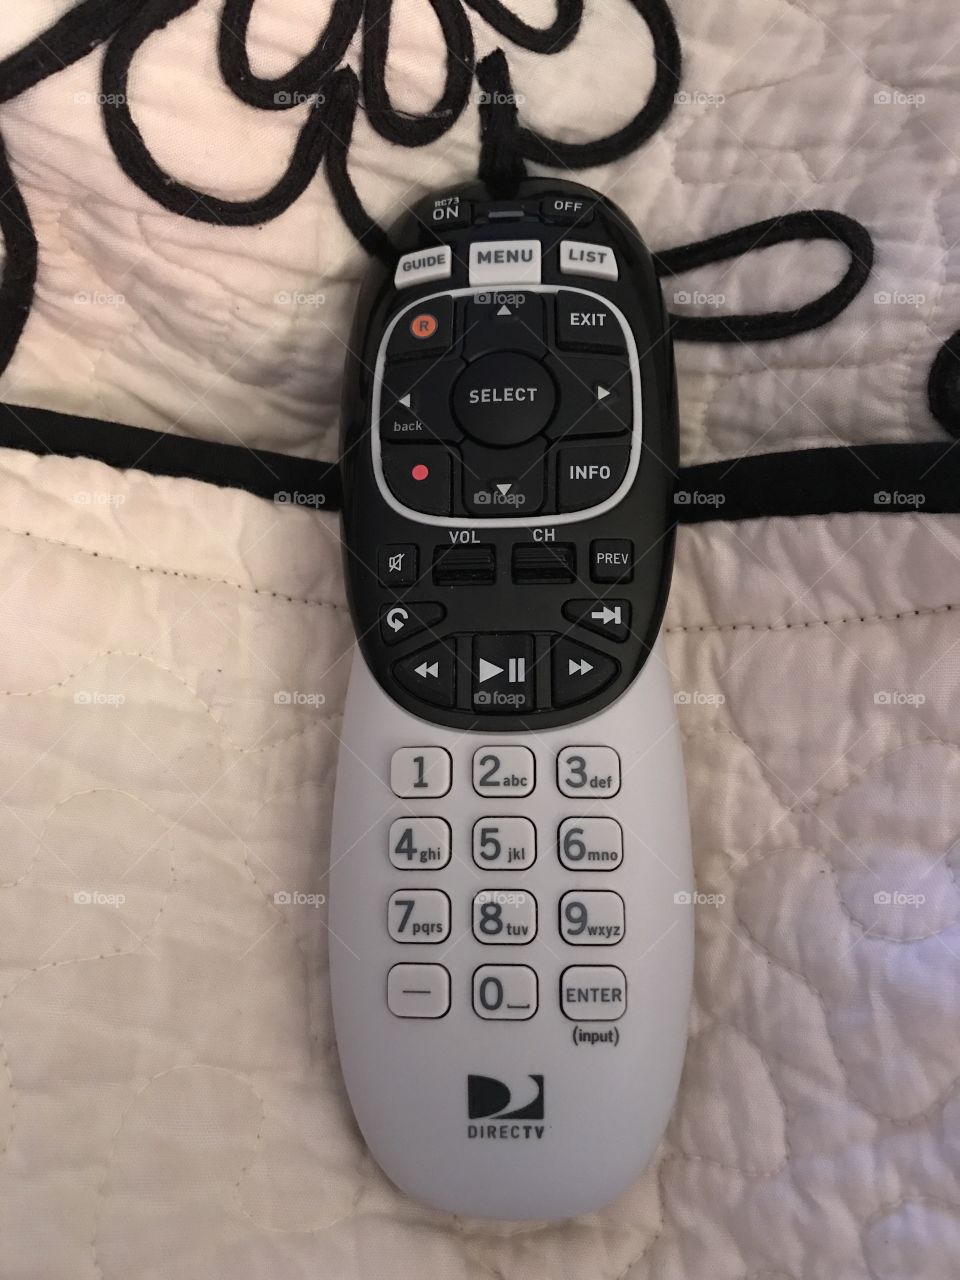 
Remote...controlling